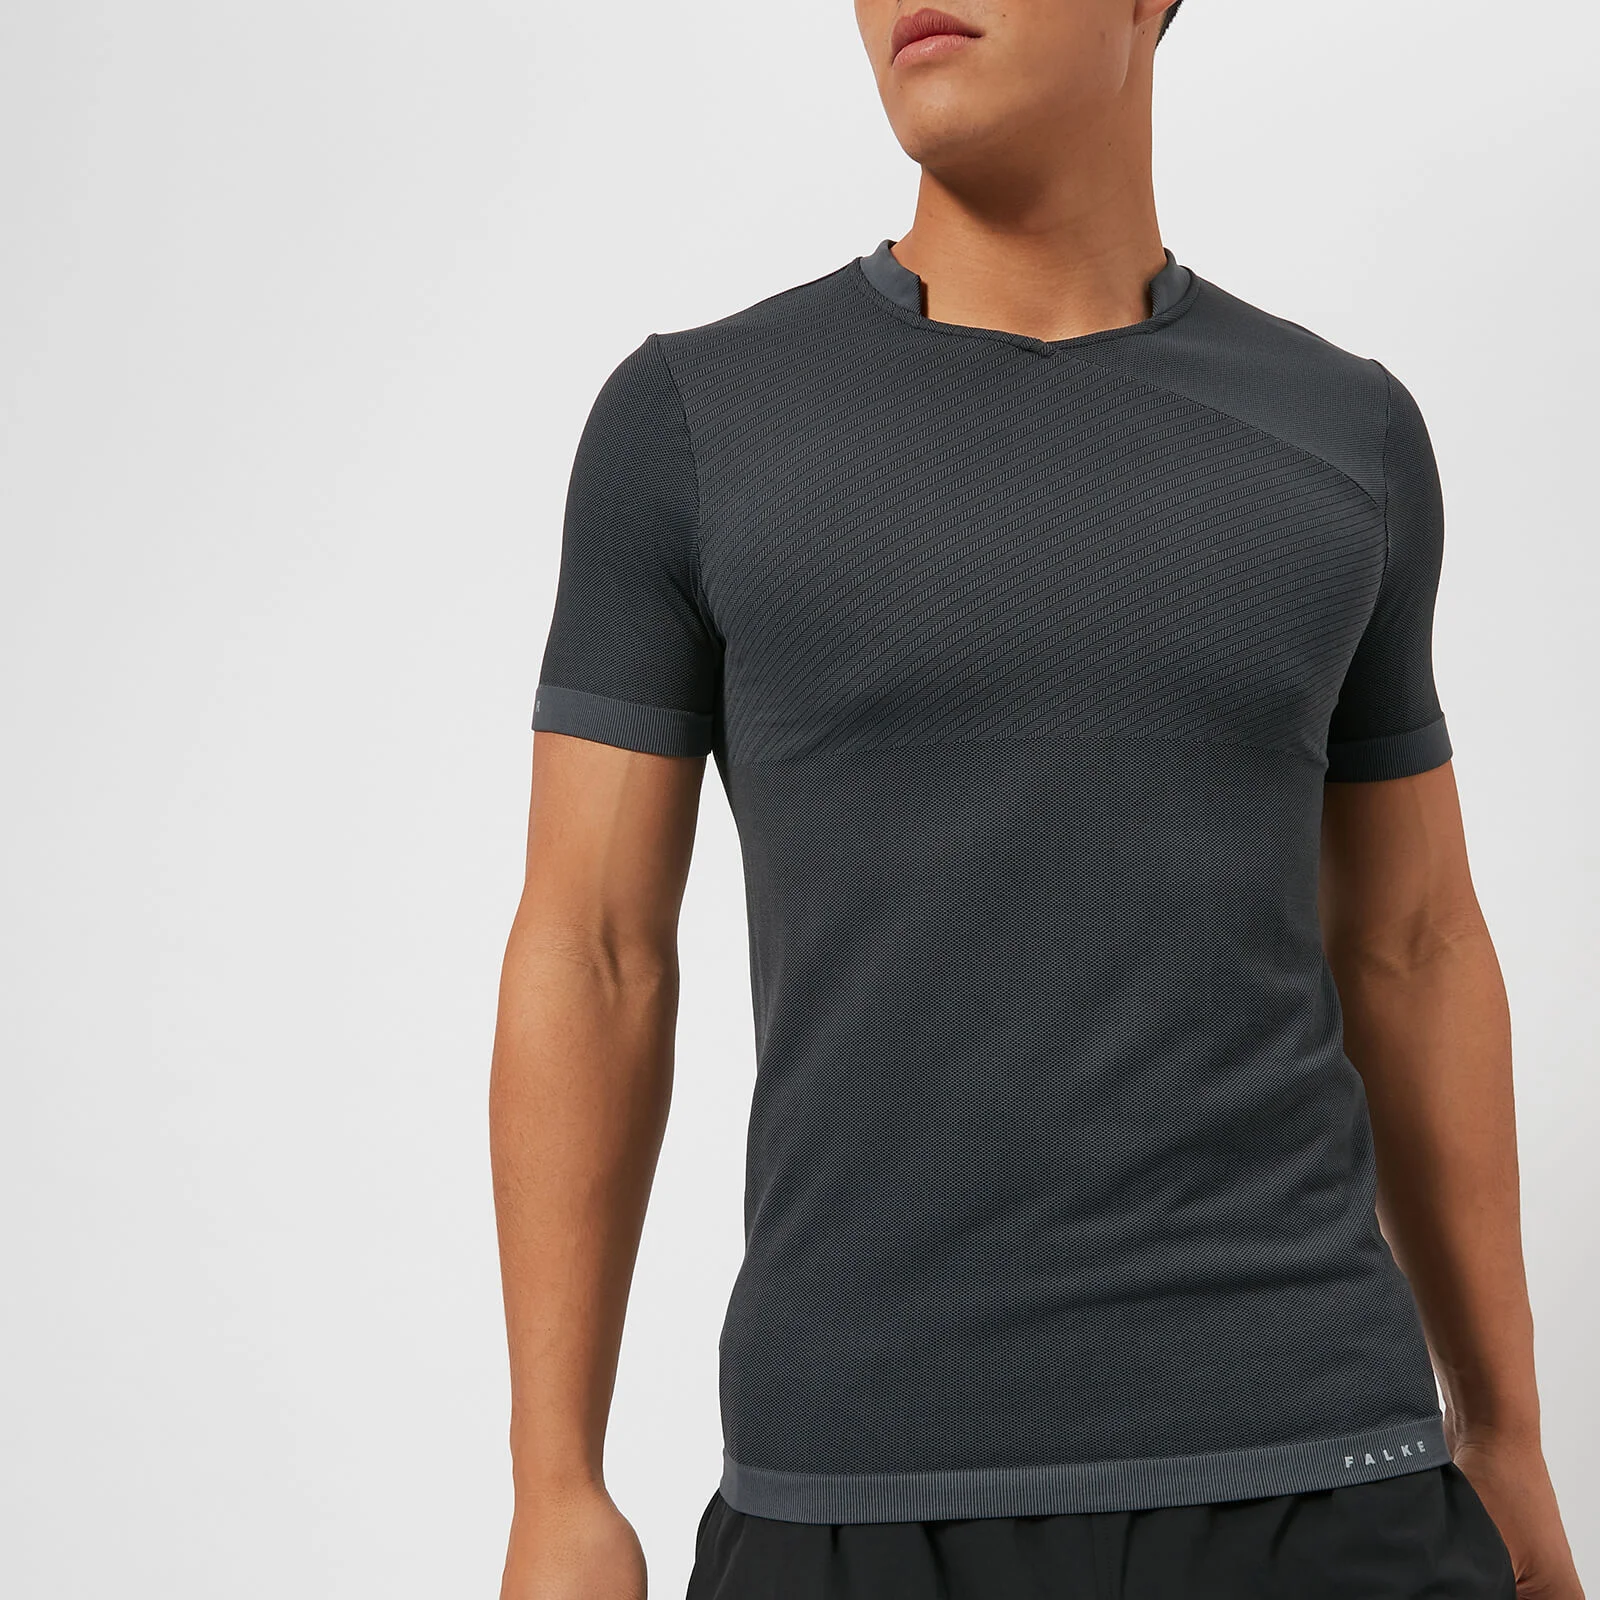 FALKE Ergonomic Sport System Men's Fitness Short Sleeve T-Shirt - Concrete Image 1